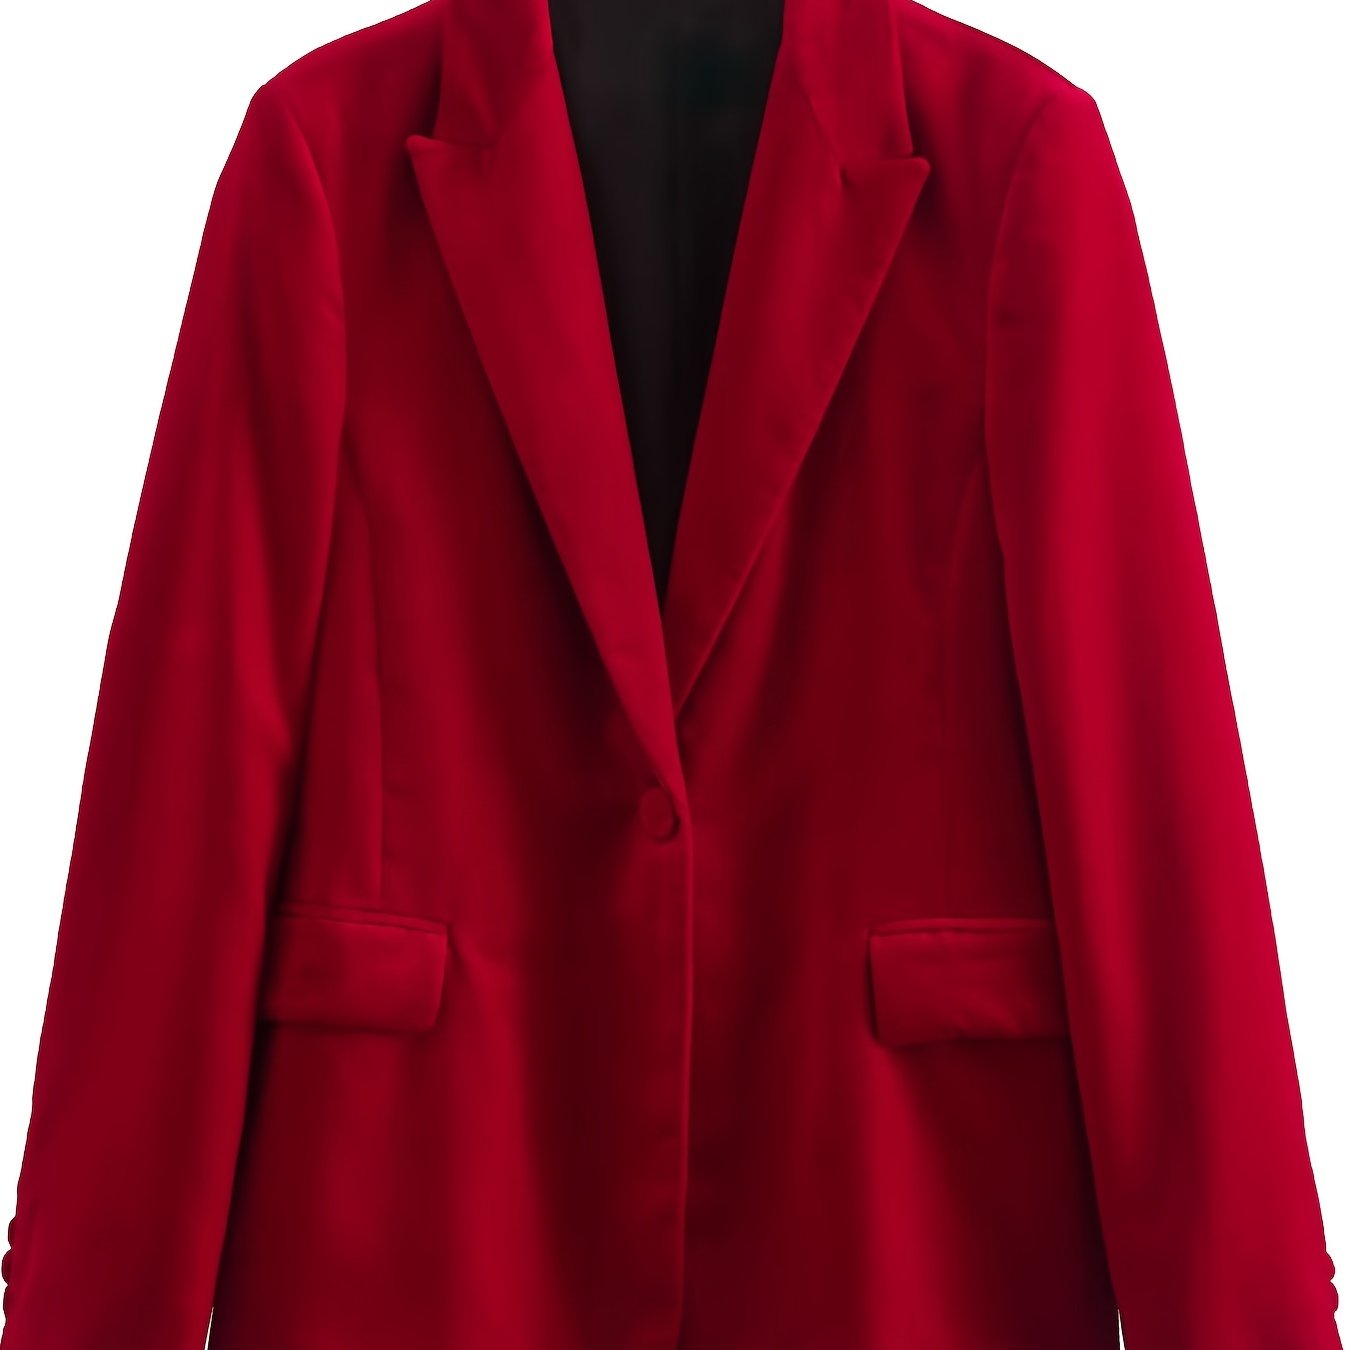 Antmvs Solid Open Front Blazer, Elegant Lapel Long Sleeve Blazer, Elegant & Stylish Outerwear For Office & Work, Women's Clothing